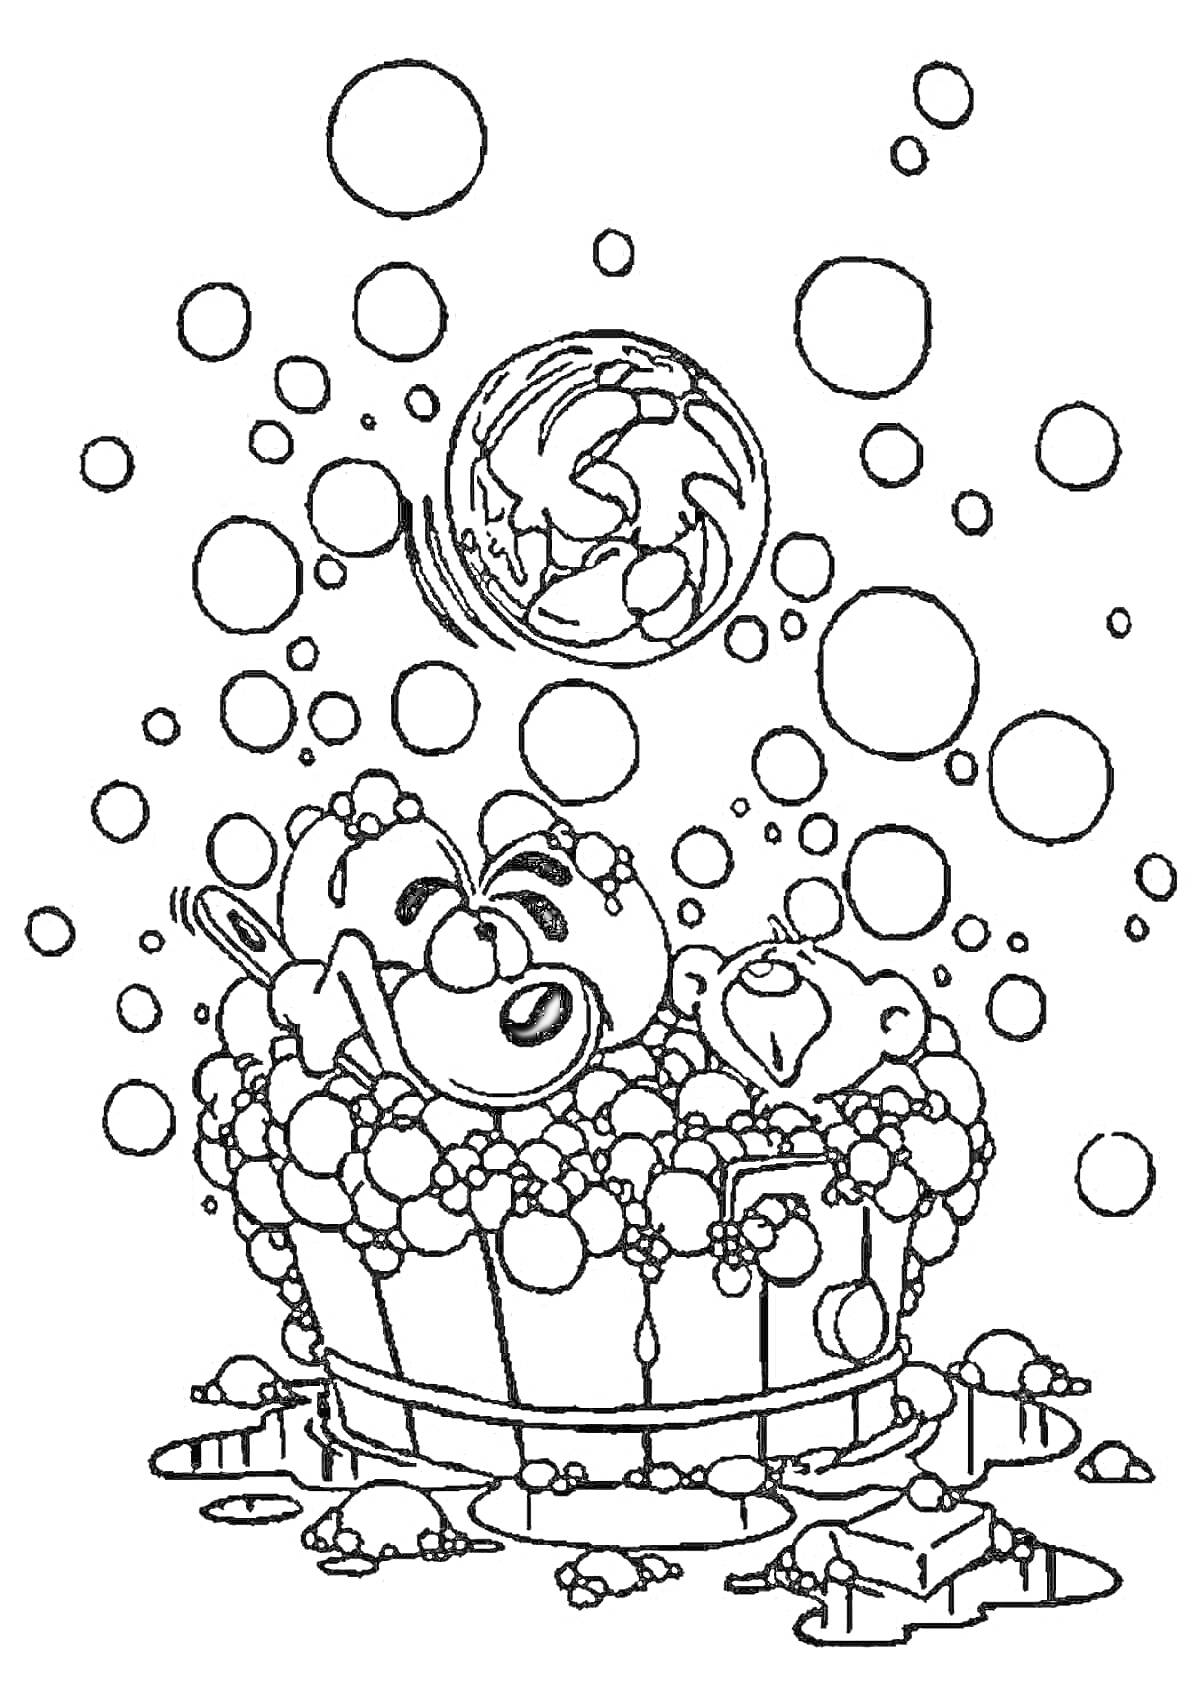 Раскраска Медвежата в ванне с пузырями